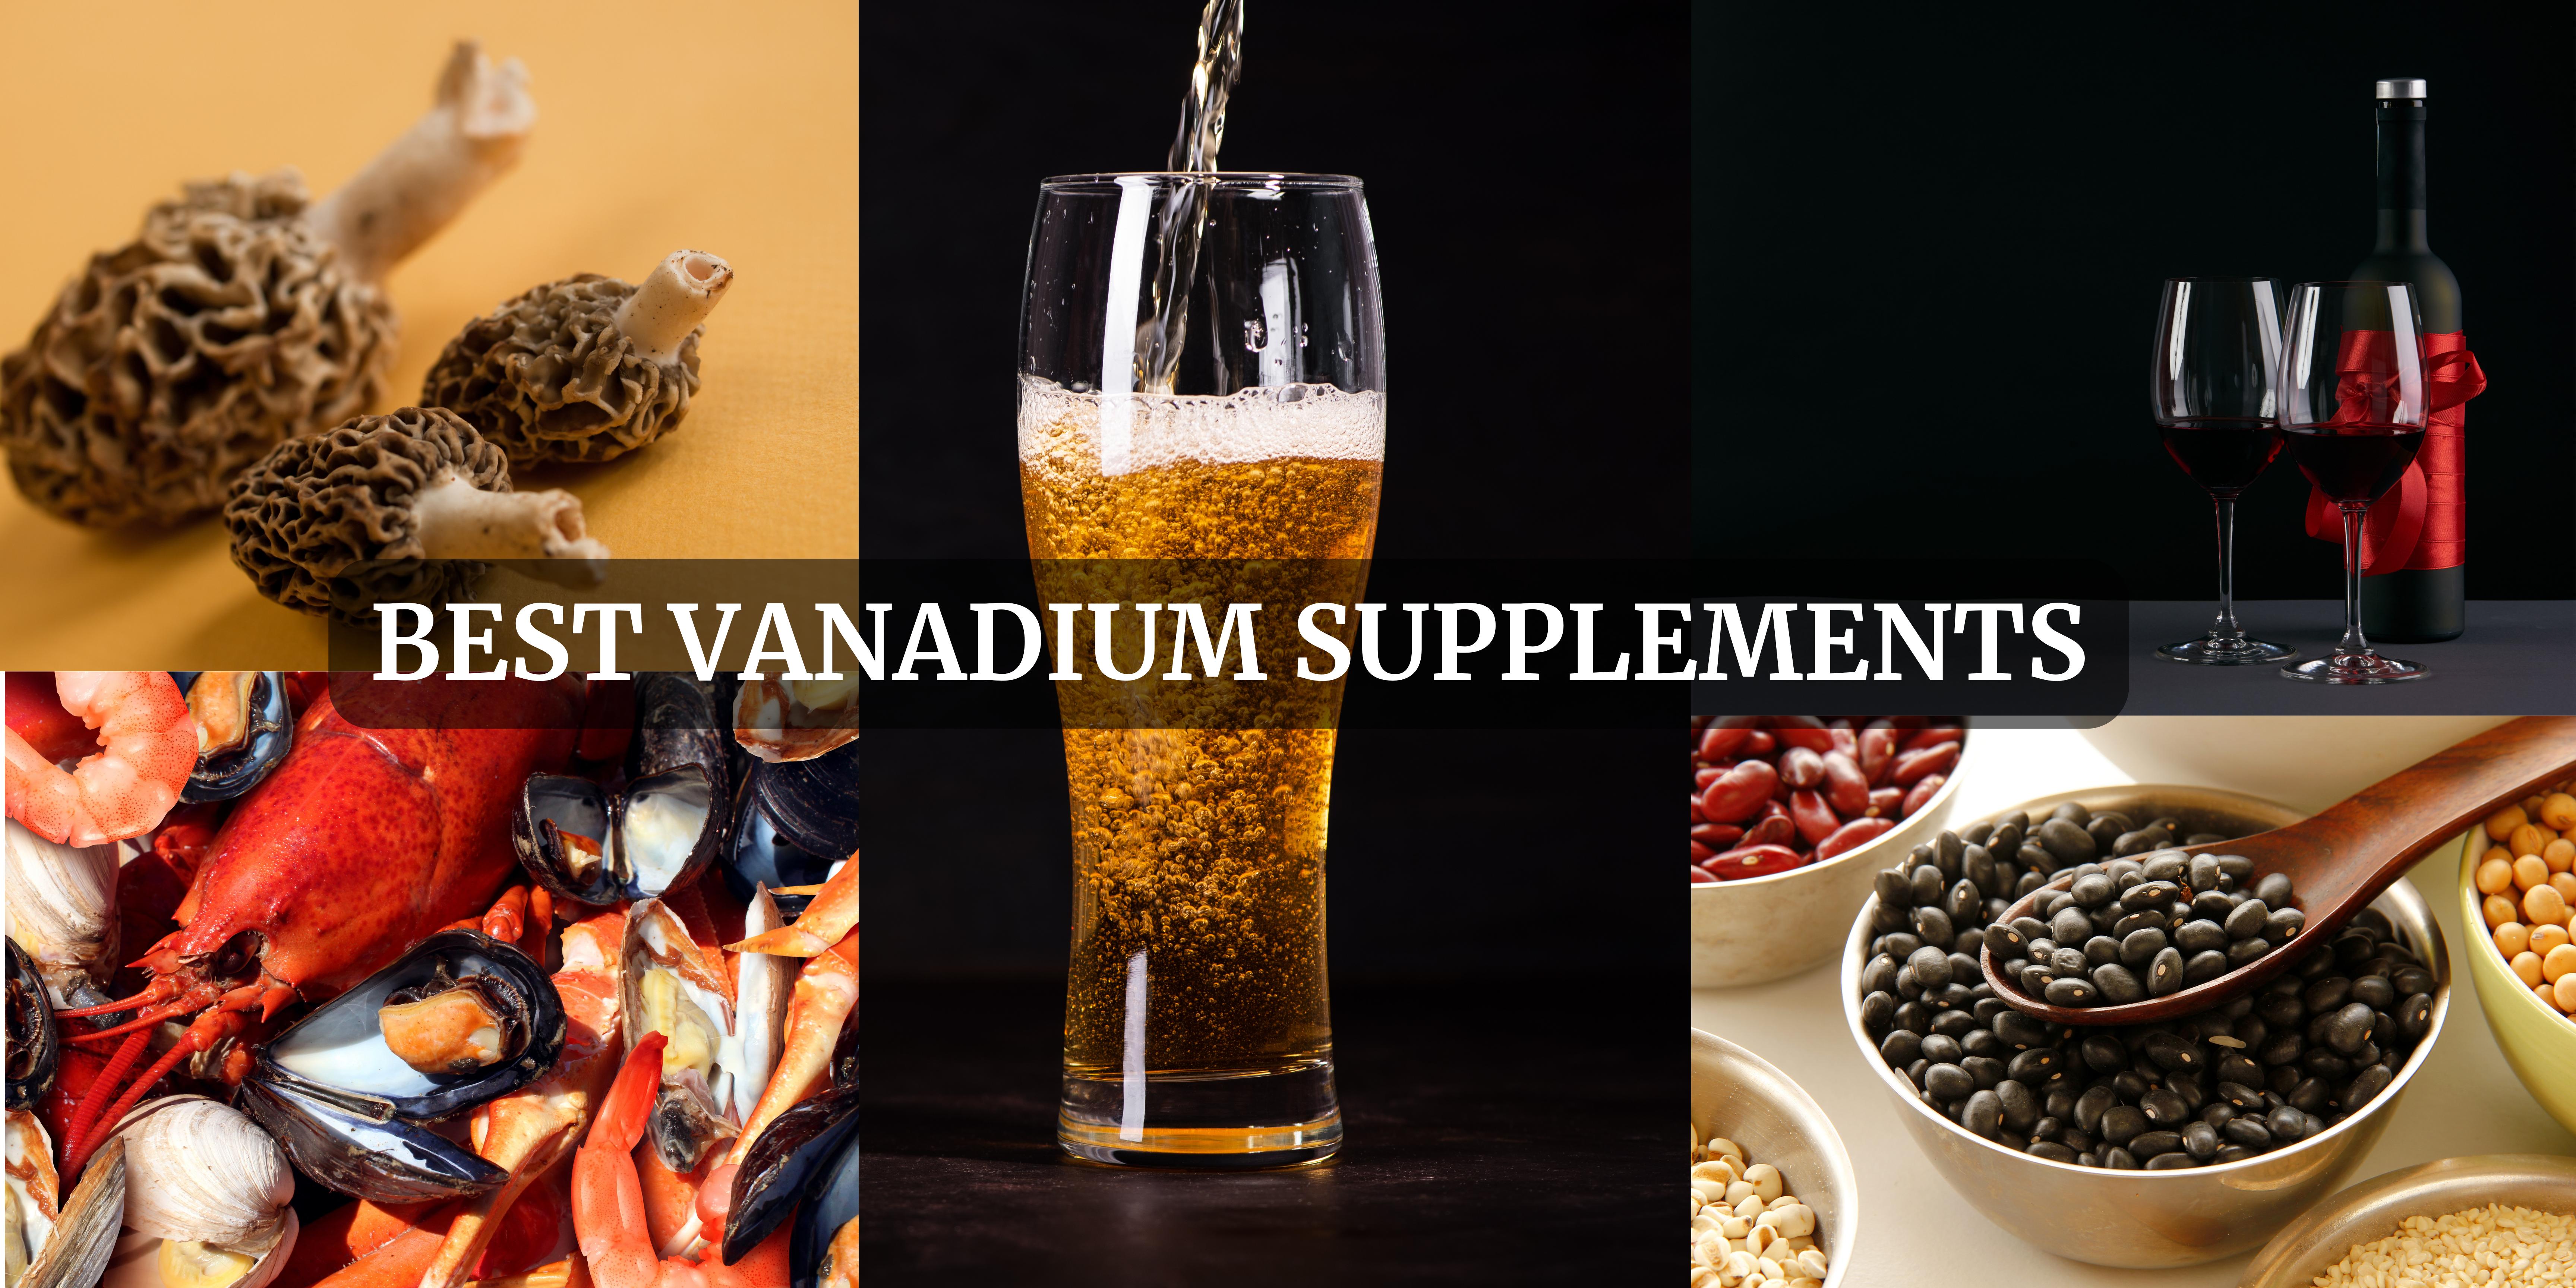 Vanadium Supplements in Spain